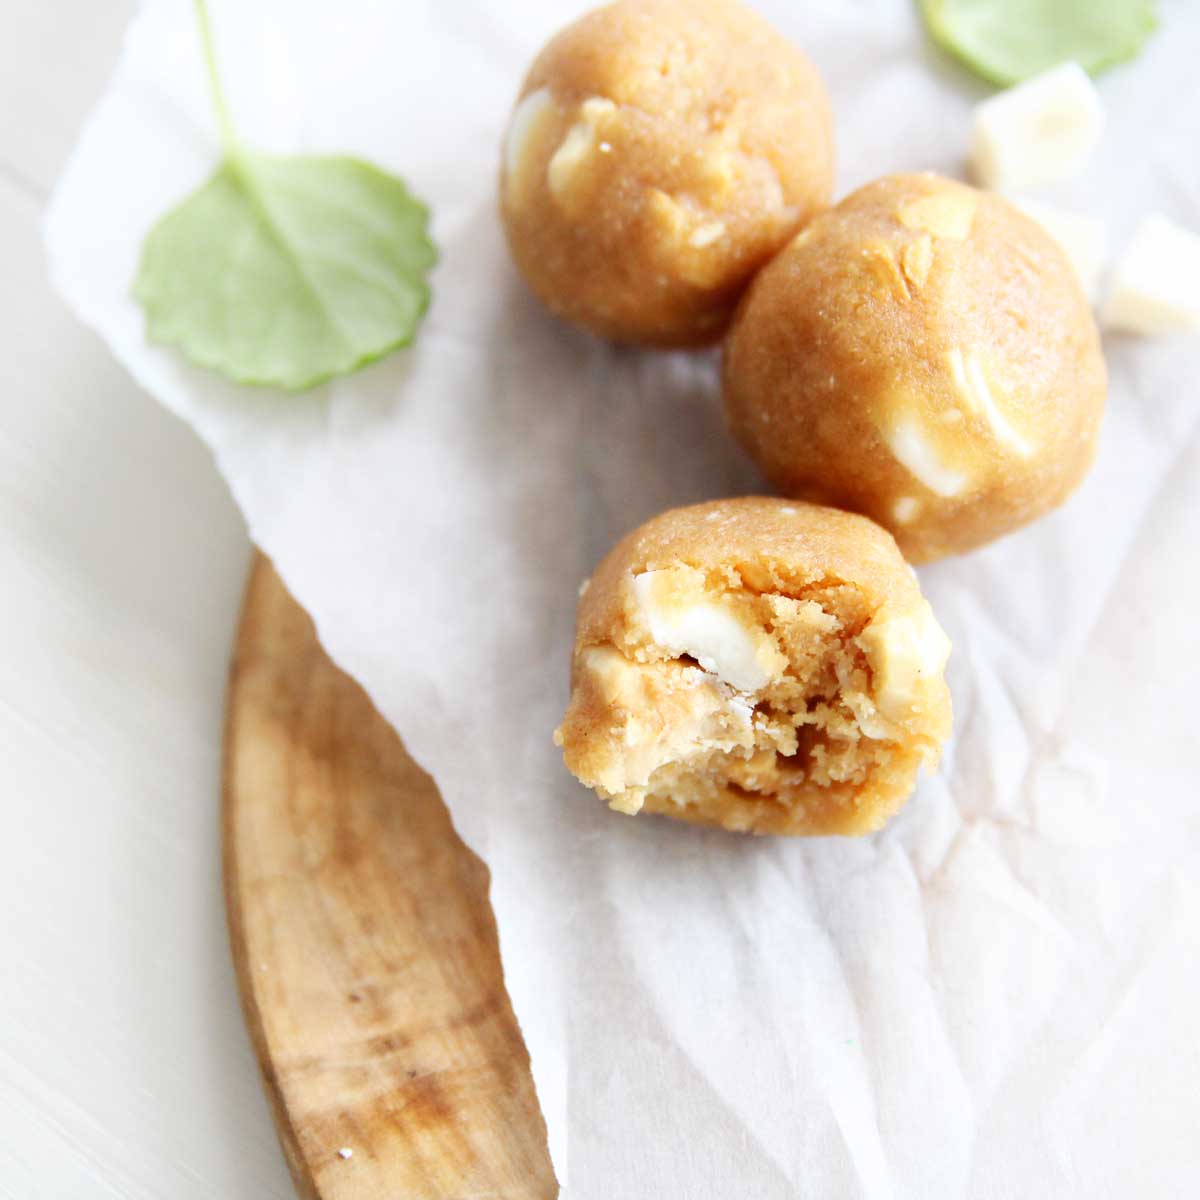 Sweet Potato Protein Balls Recipe (Easy Healthy and No Bake) - protein balls